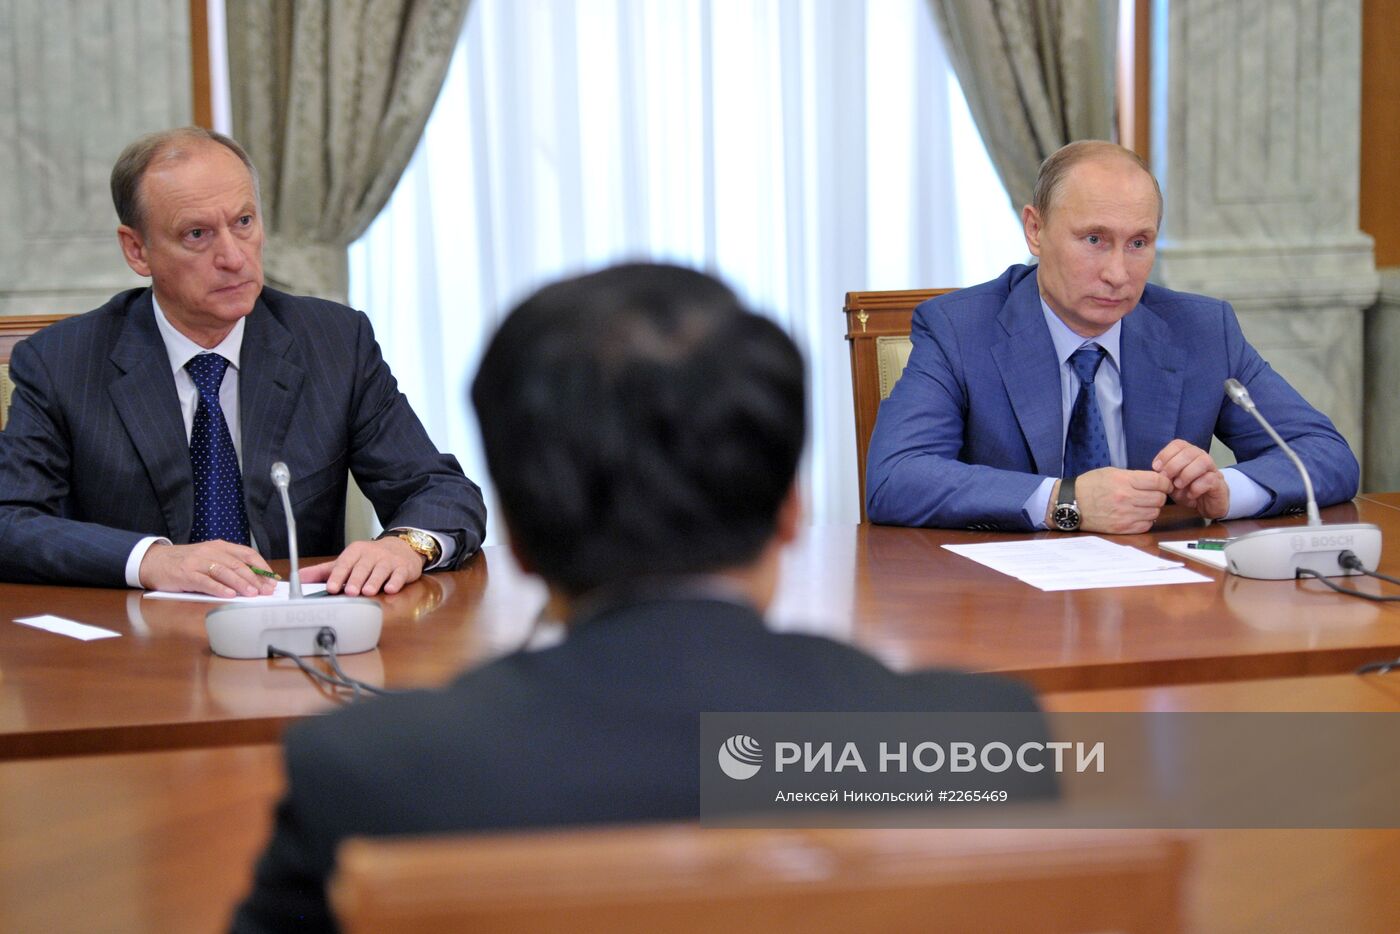 В.Путин провел рабочую встречу с Я.Цзечи